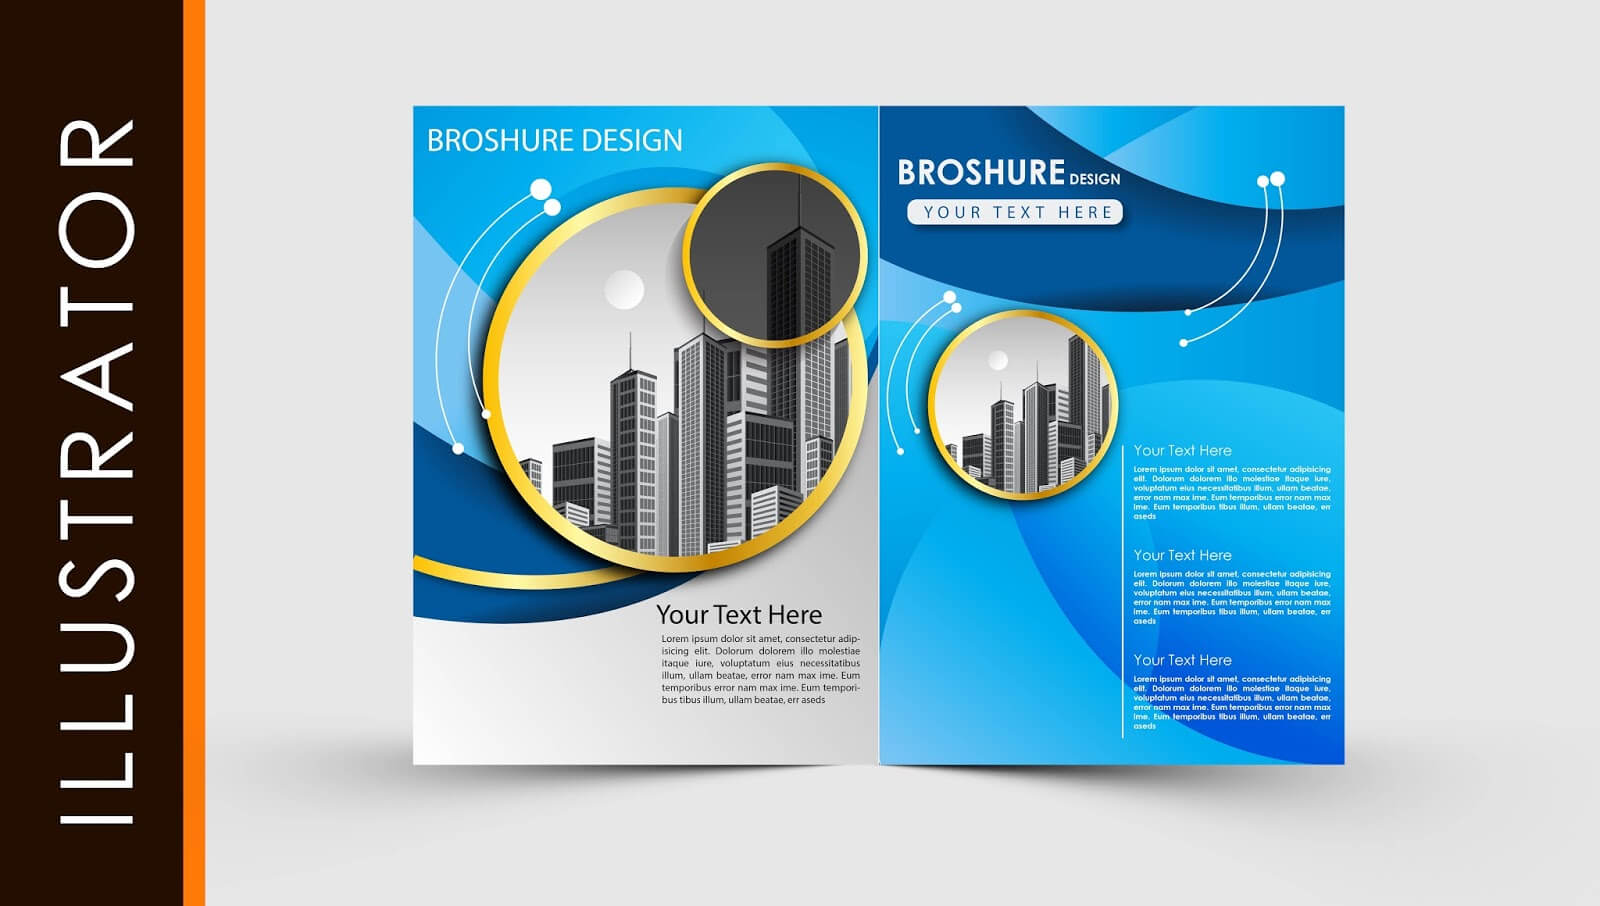 Free Download Adobe Illustrator Template Brochure Two Fold In Adobe Illustrator Brochure Templates Free Download